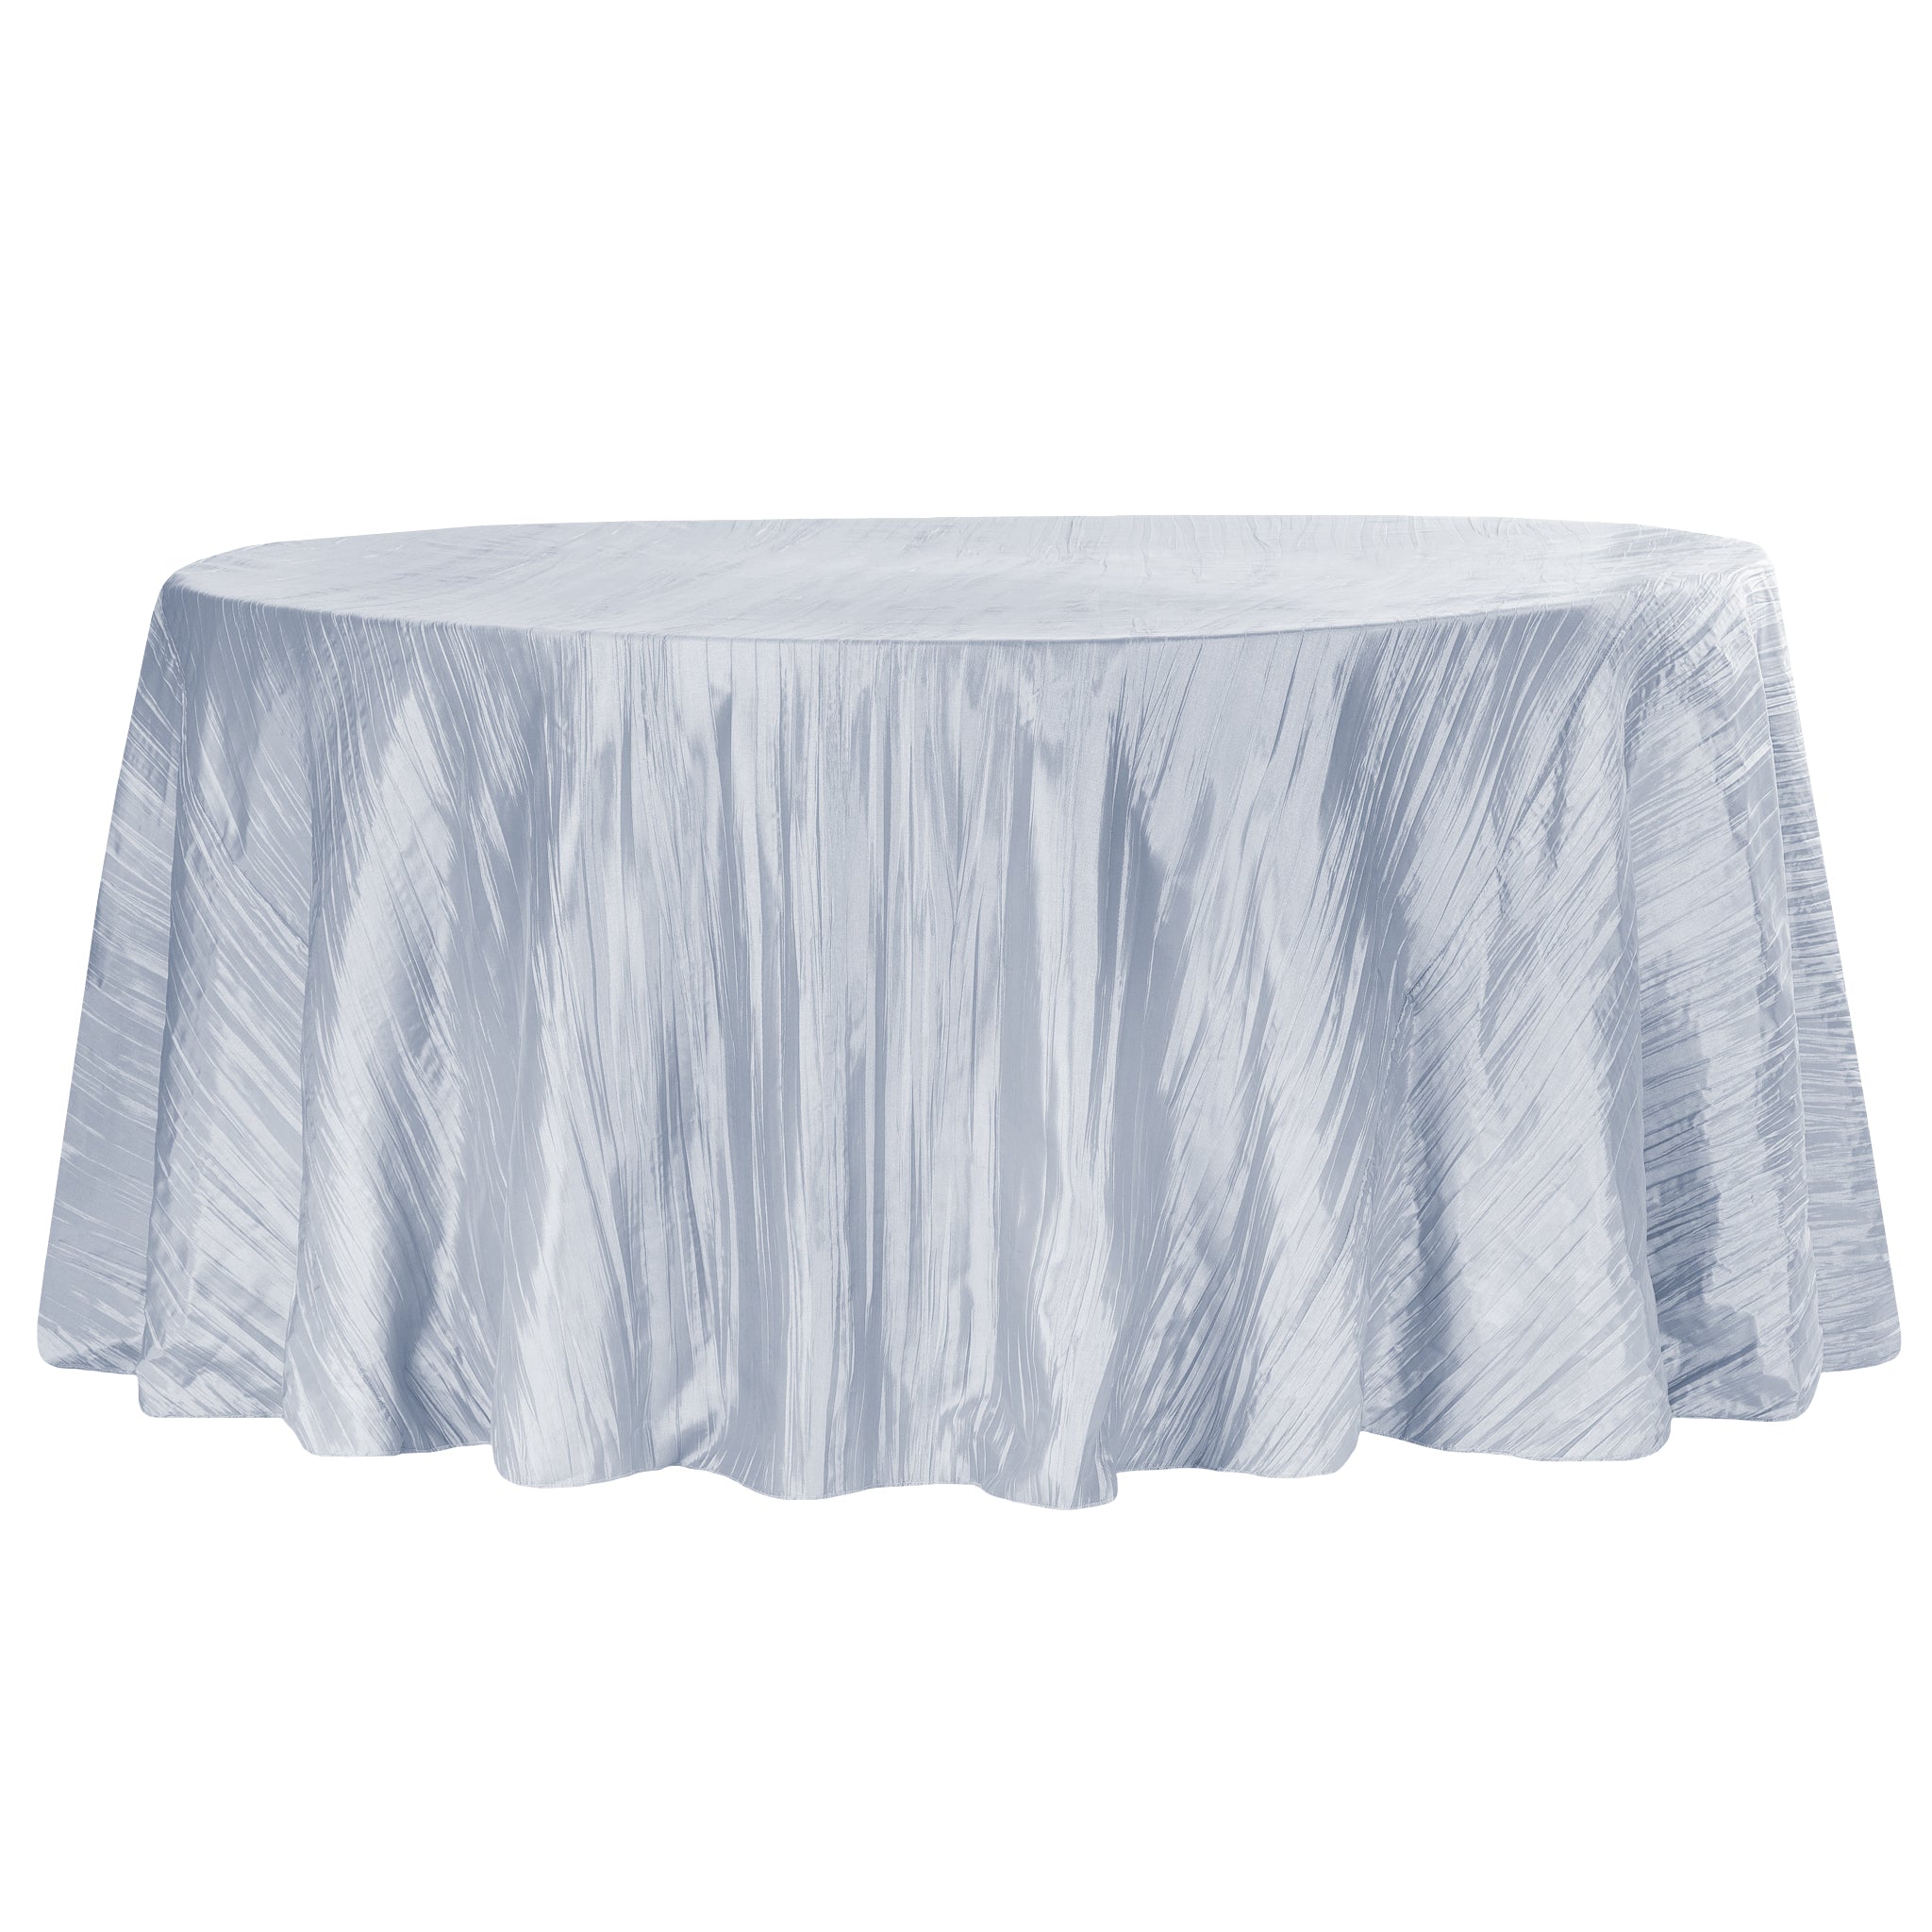 Accordion Crinkle Taffeta 132" Round Tablecloth - Dusty Blue